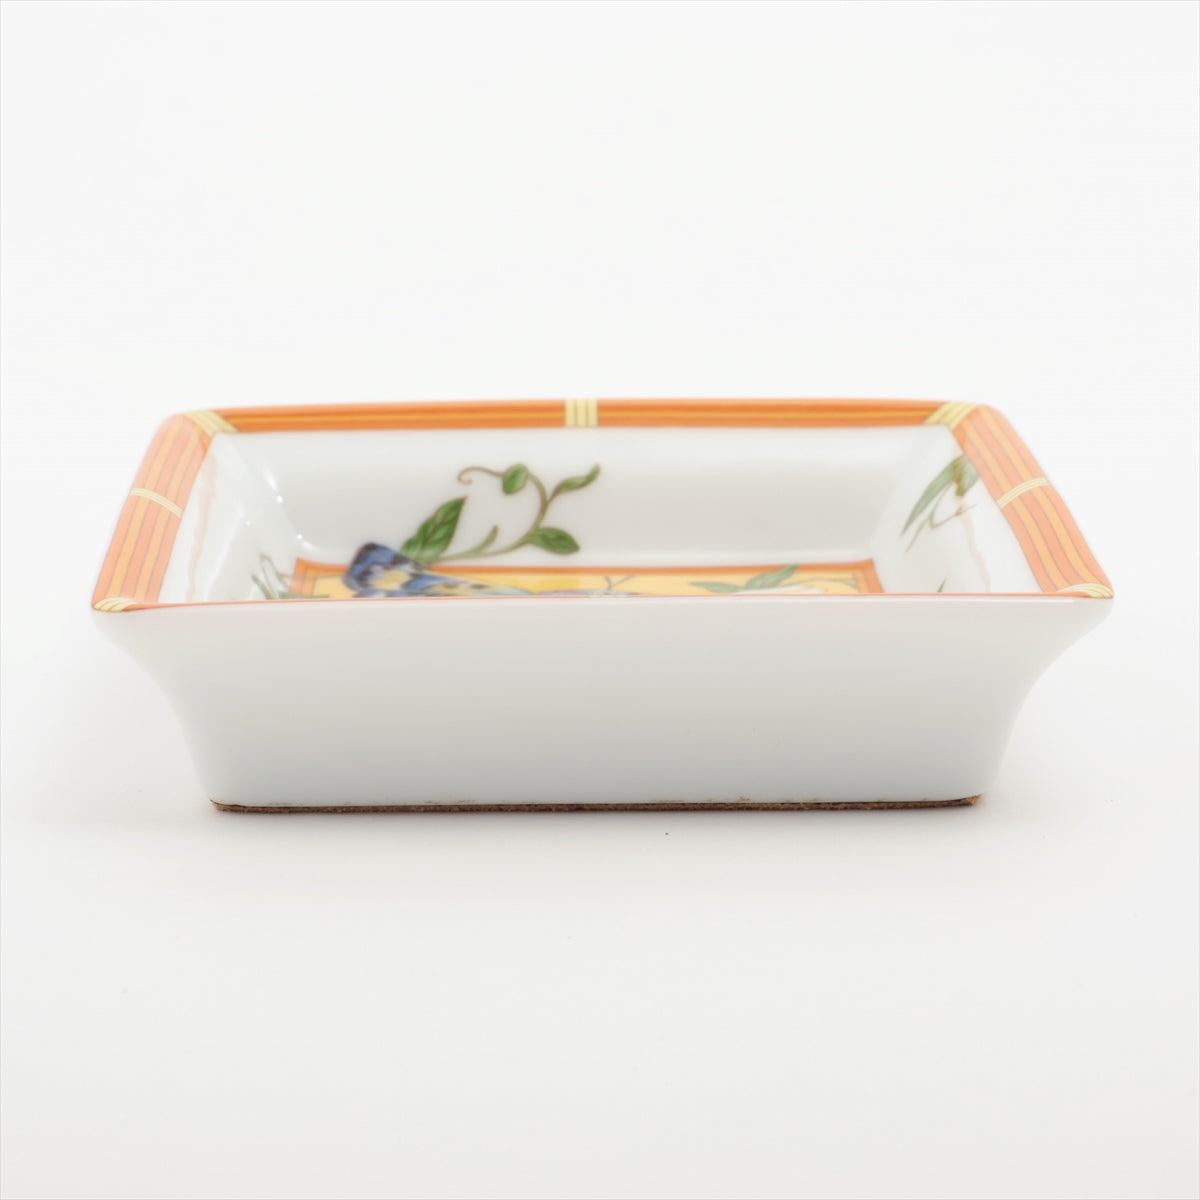 Hermès Siesta Small plate Ceramic White x orange Hummingbird